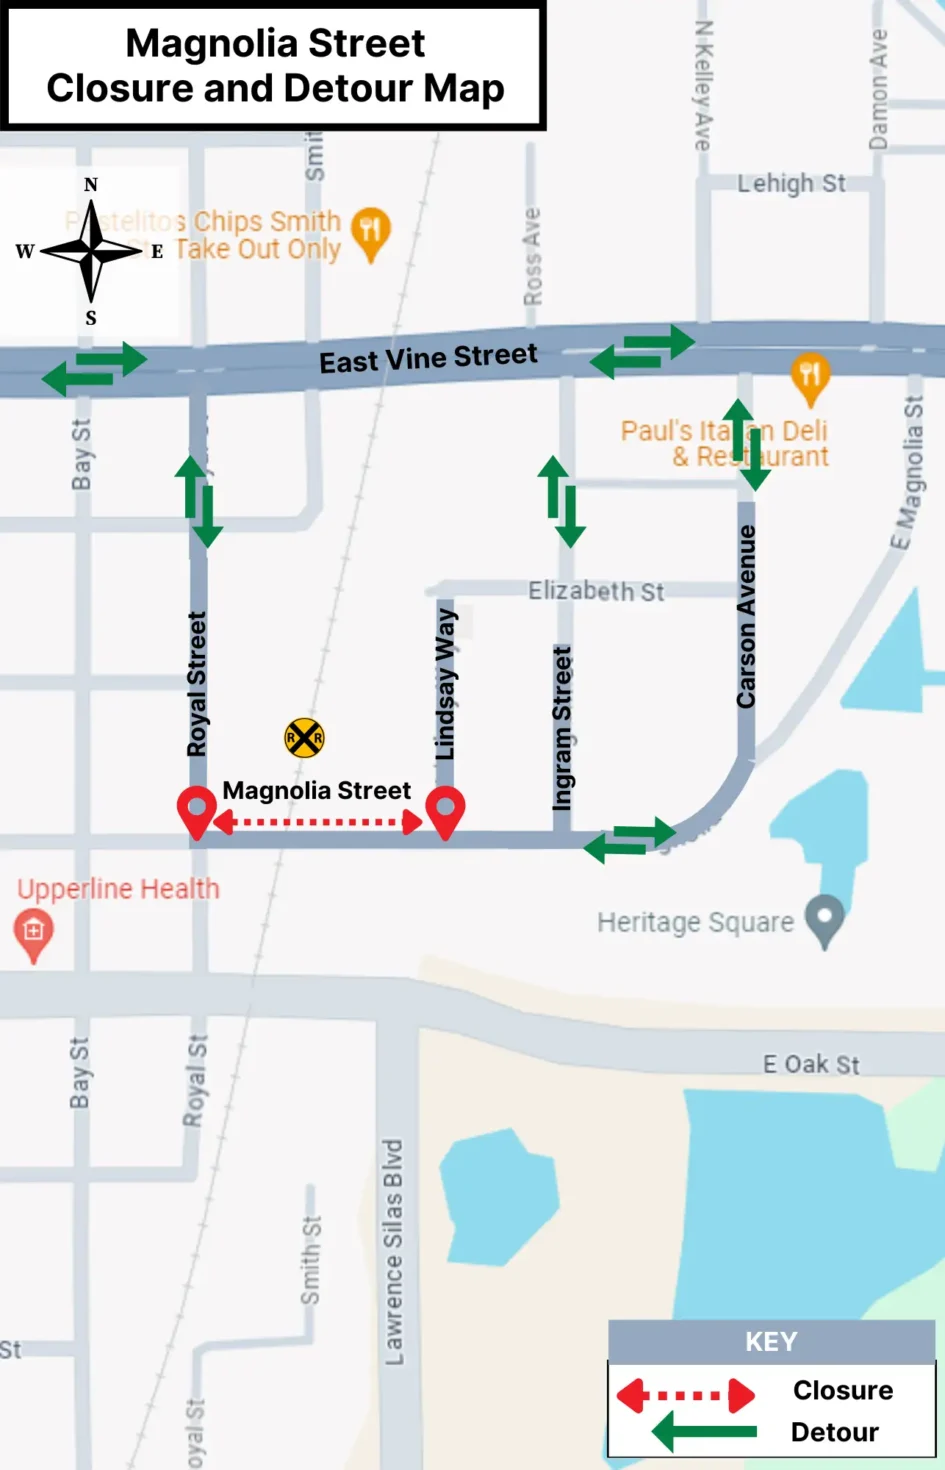 Magnolia Street Closure and Detour Map